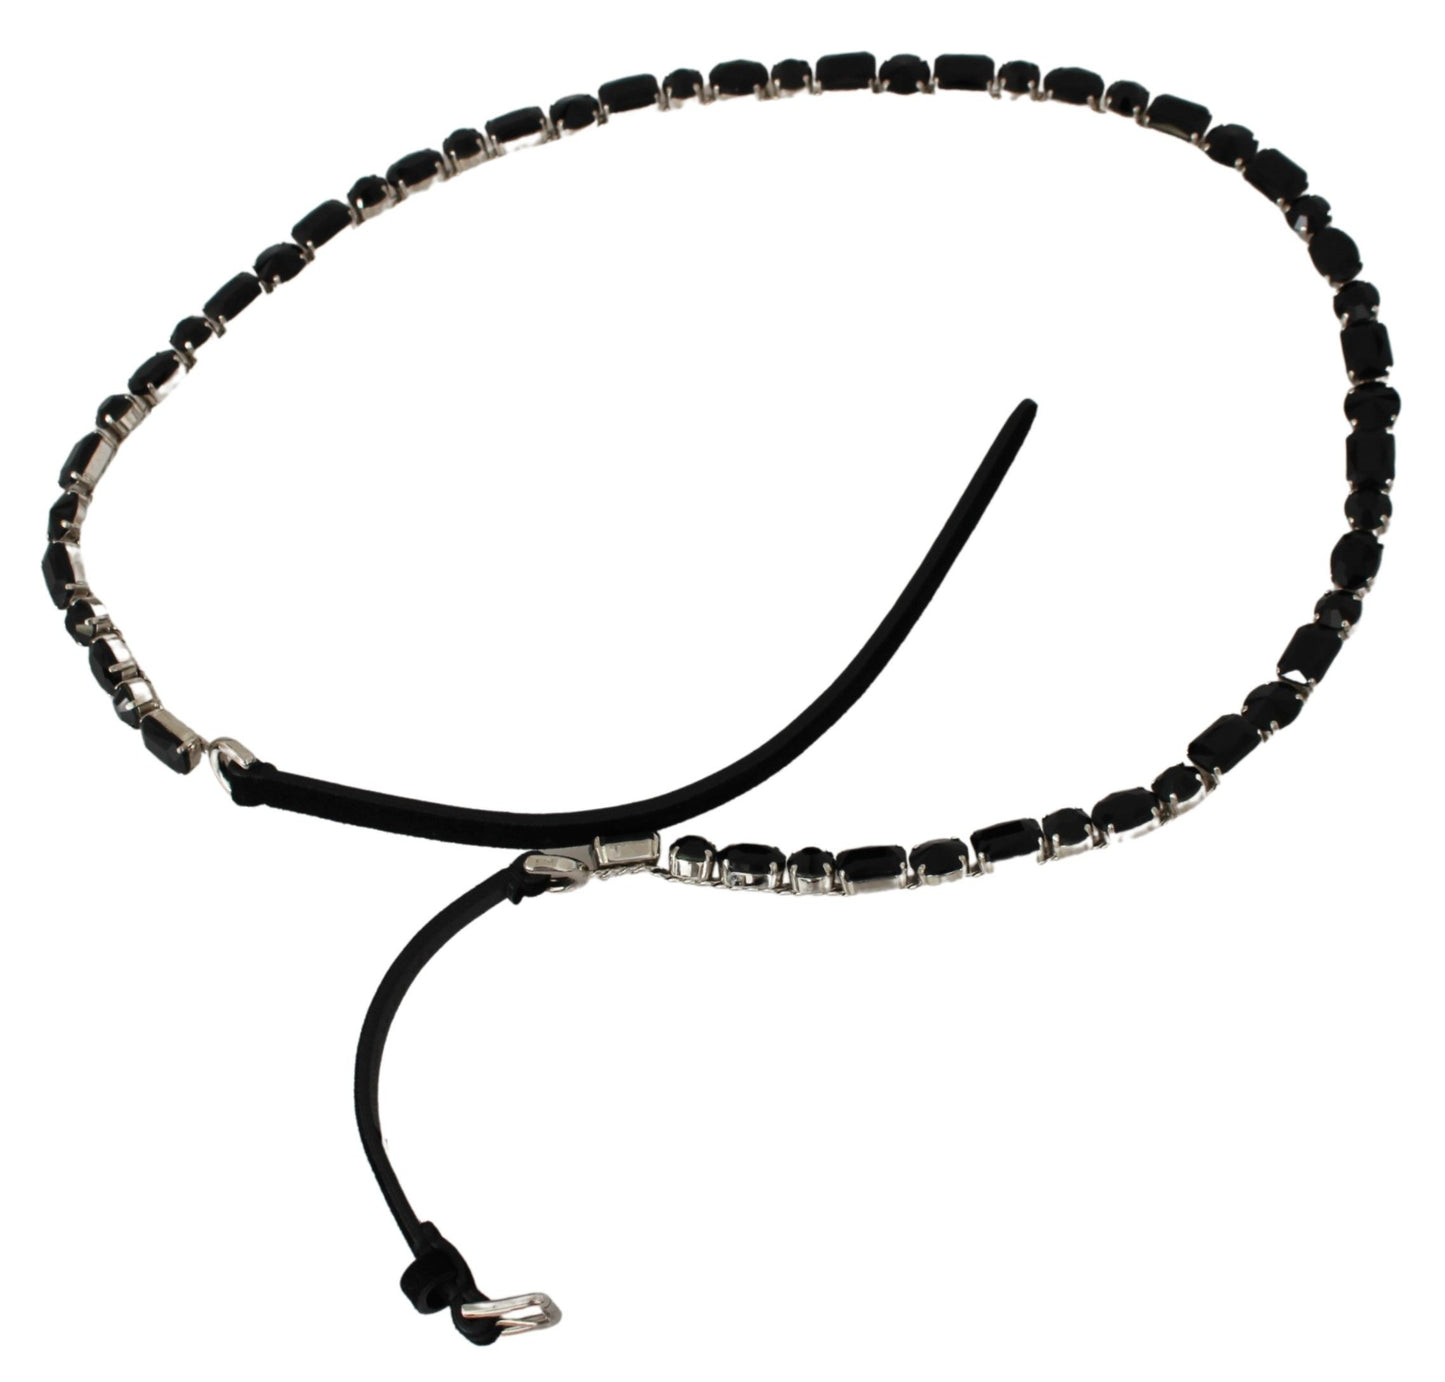 Luxurious Black Crystal-Embellished Leather Belt